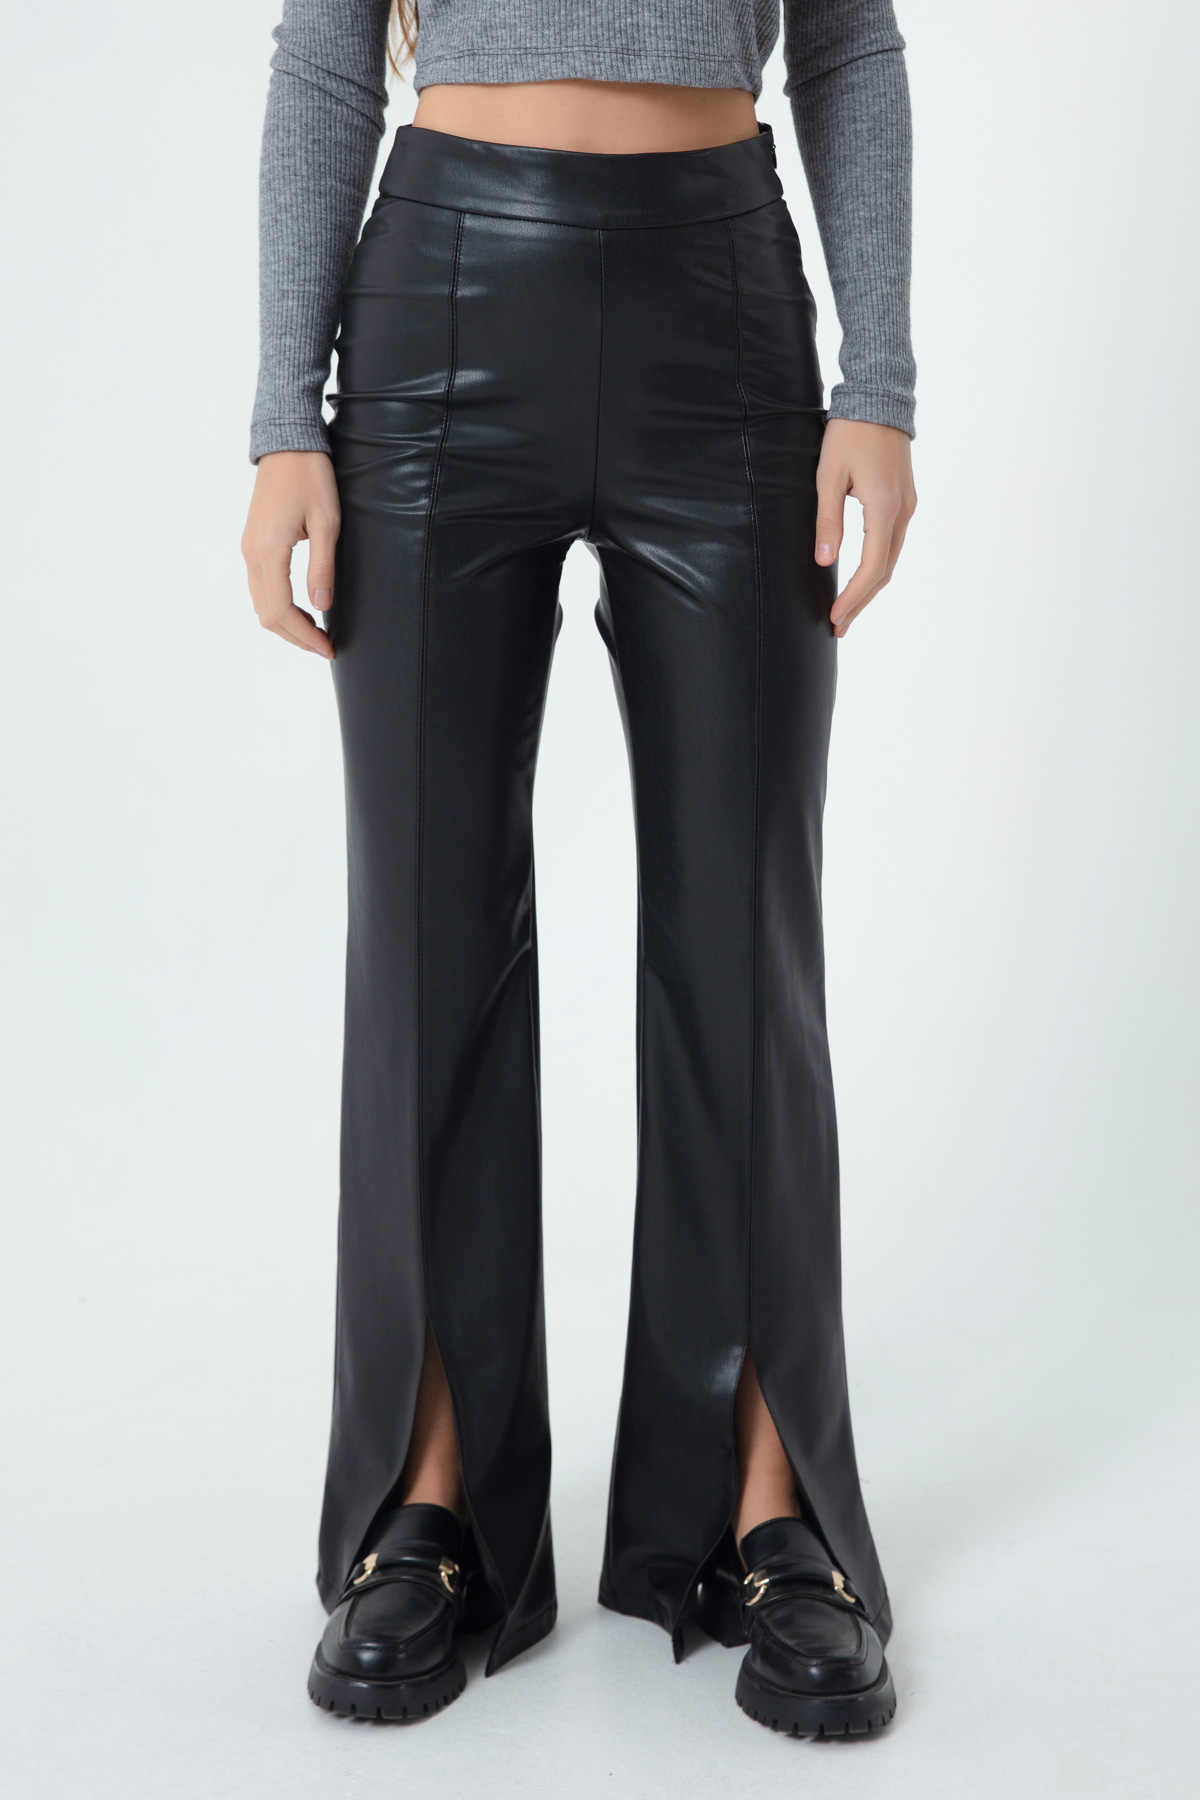 Women's Black Slit Leather Pants